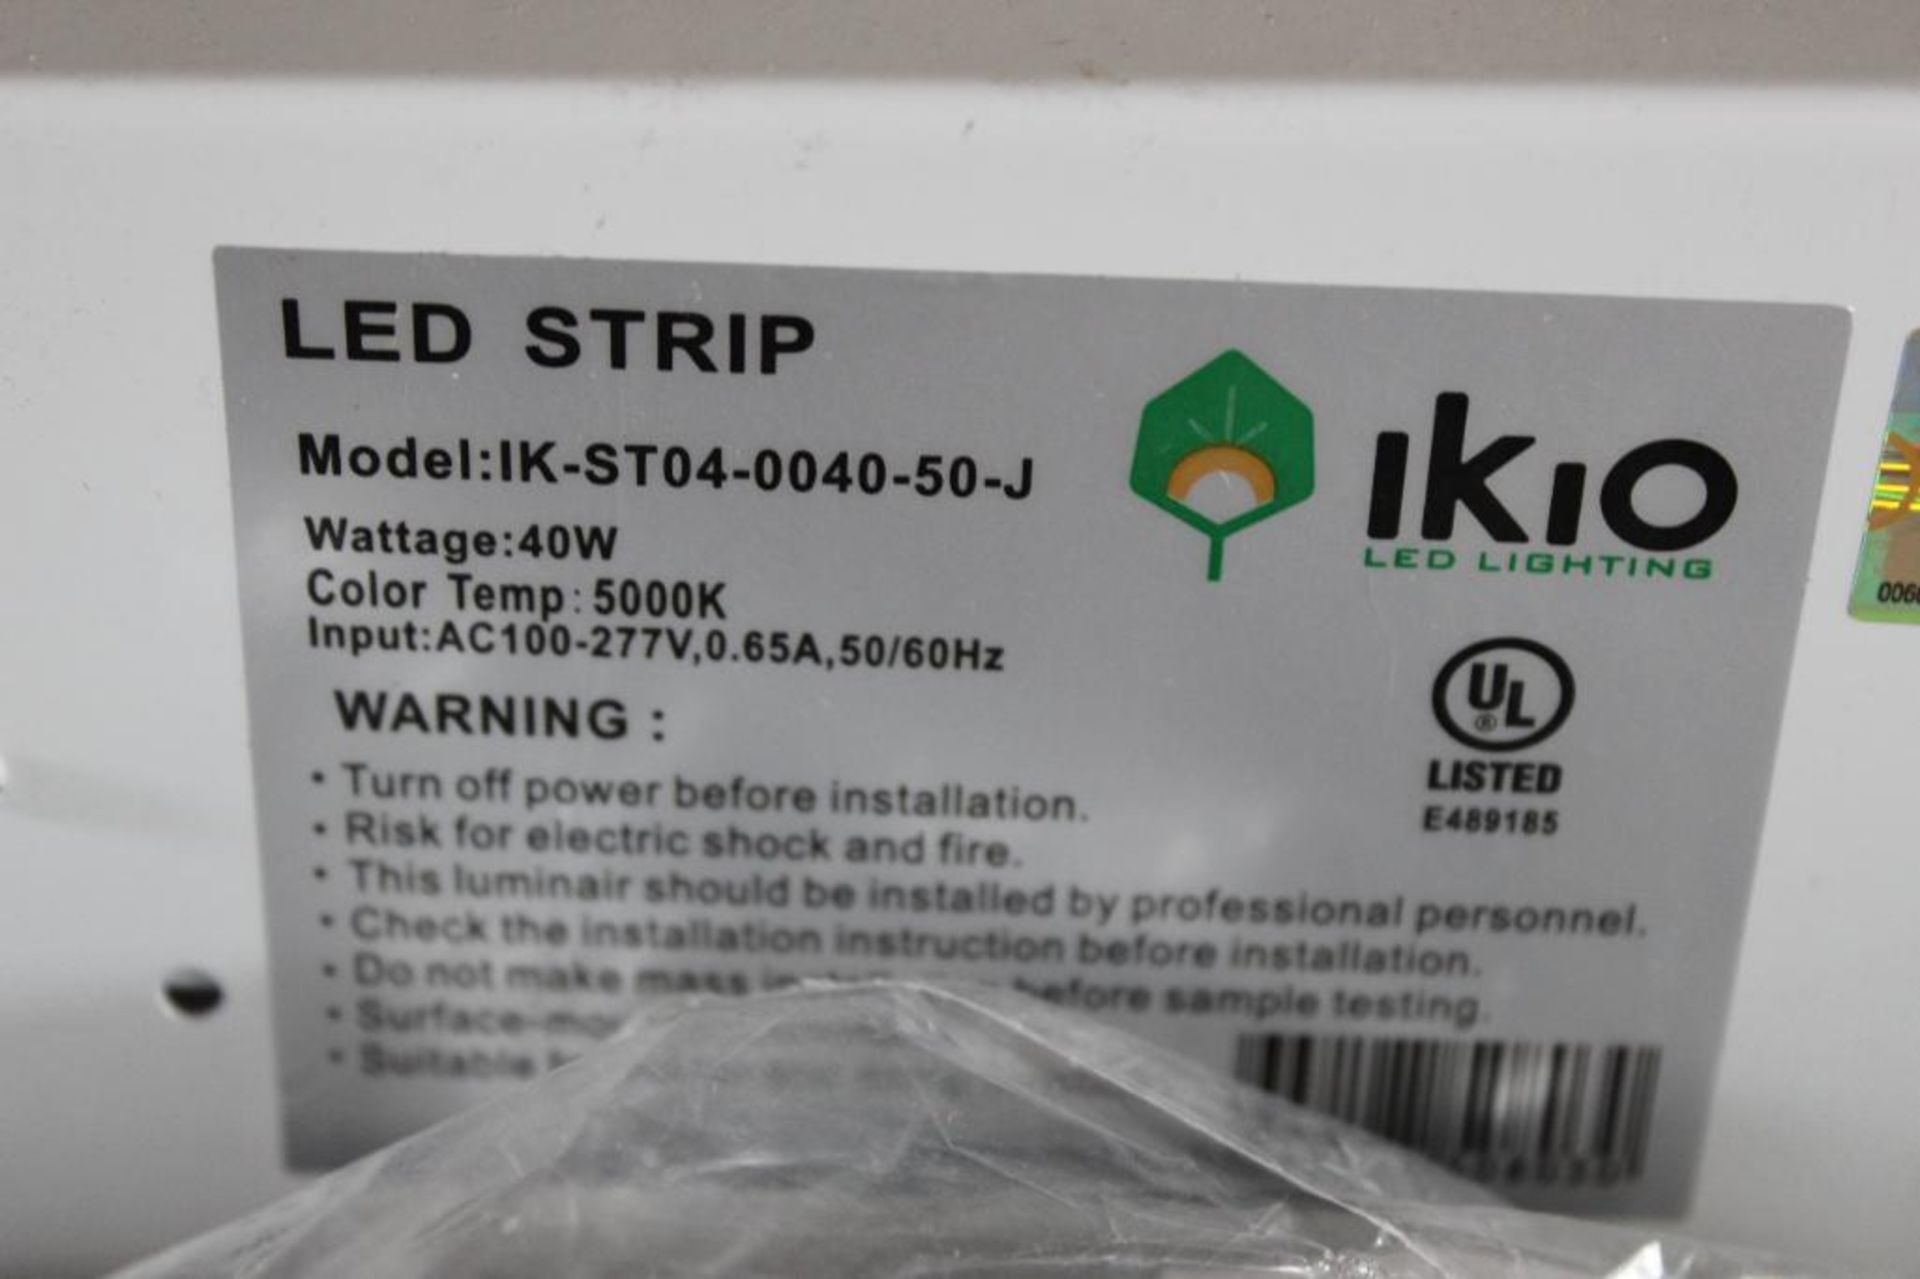 IKIO LED Strip Light Model IK-ST04-6040-50-S